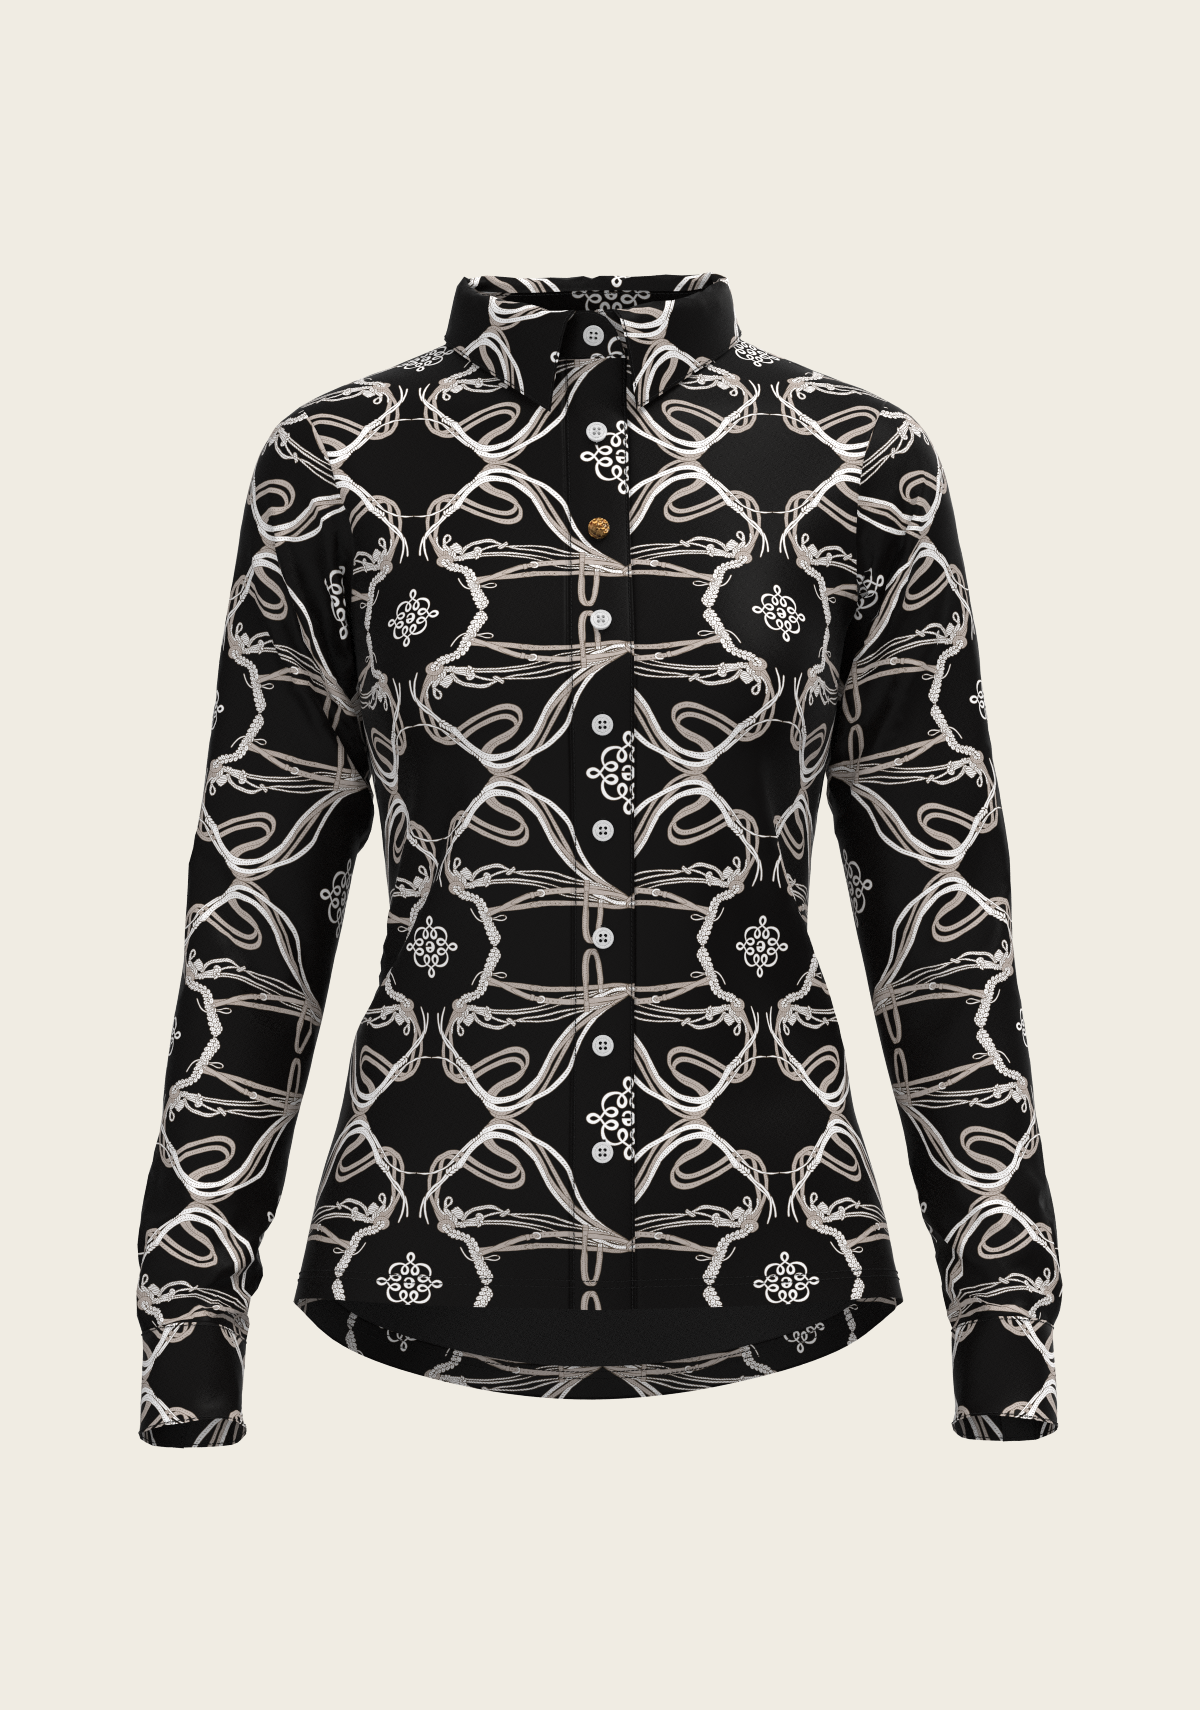 Roped Bridles on Black Ladies Button Shirt by Espoir Equestrian